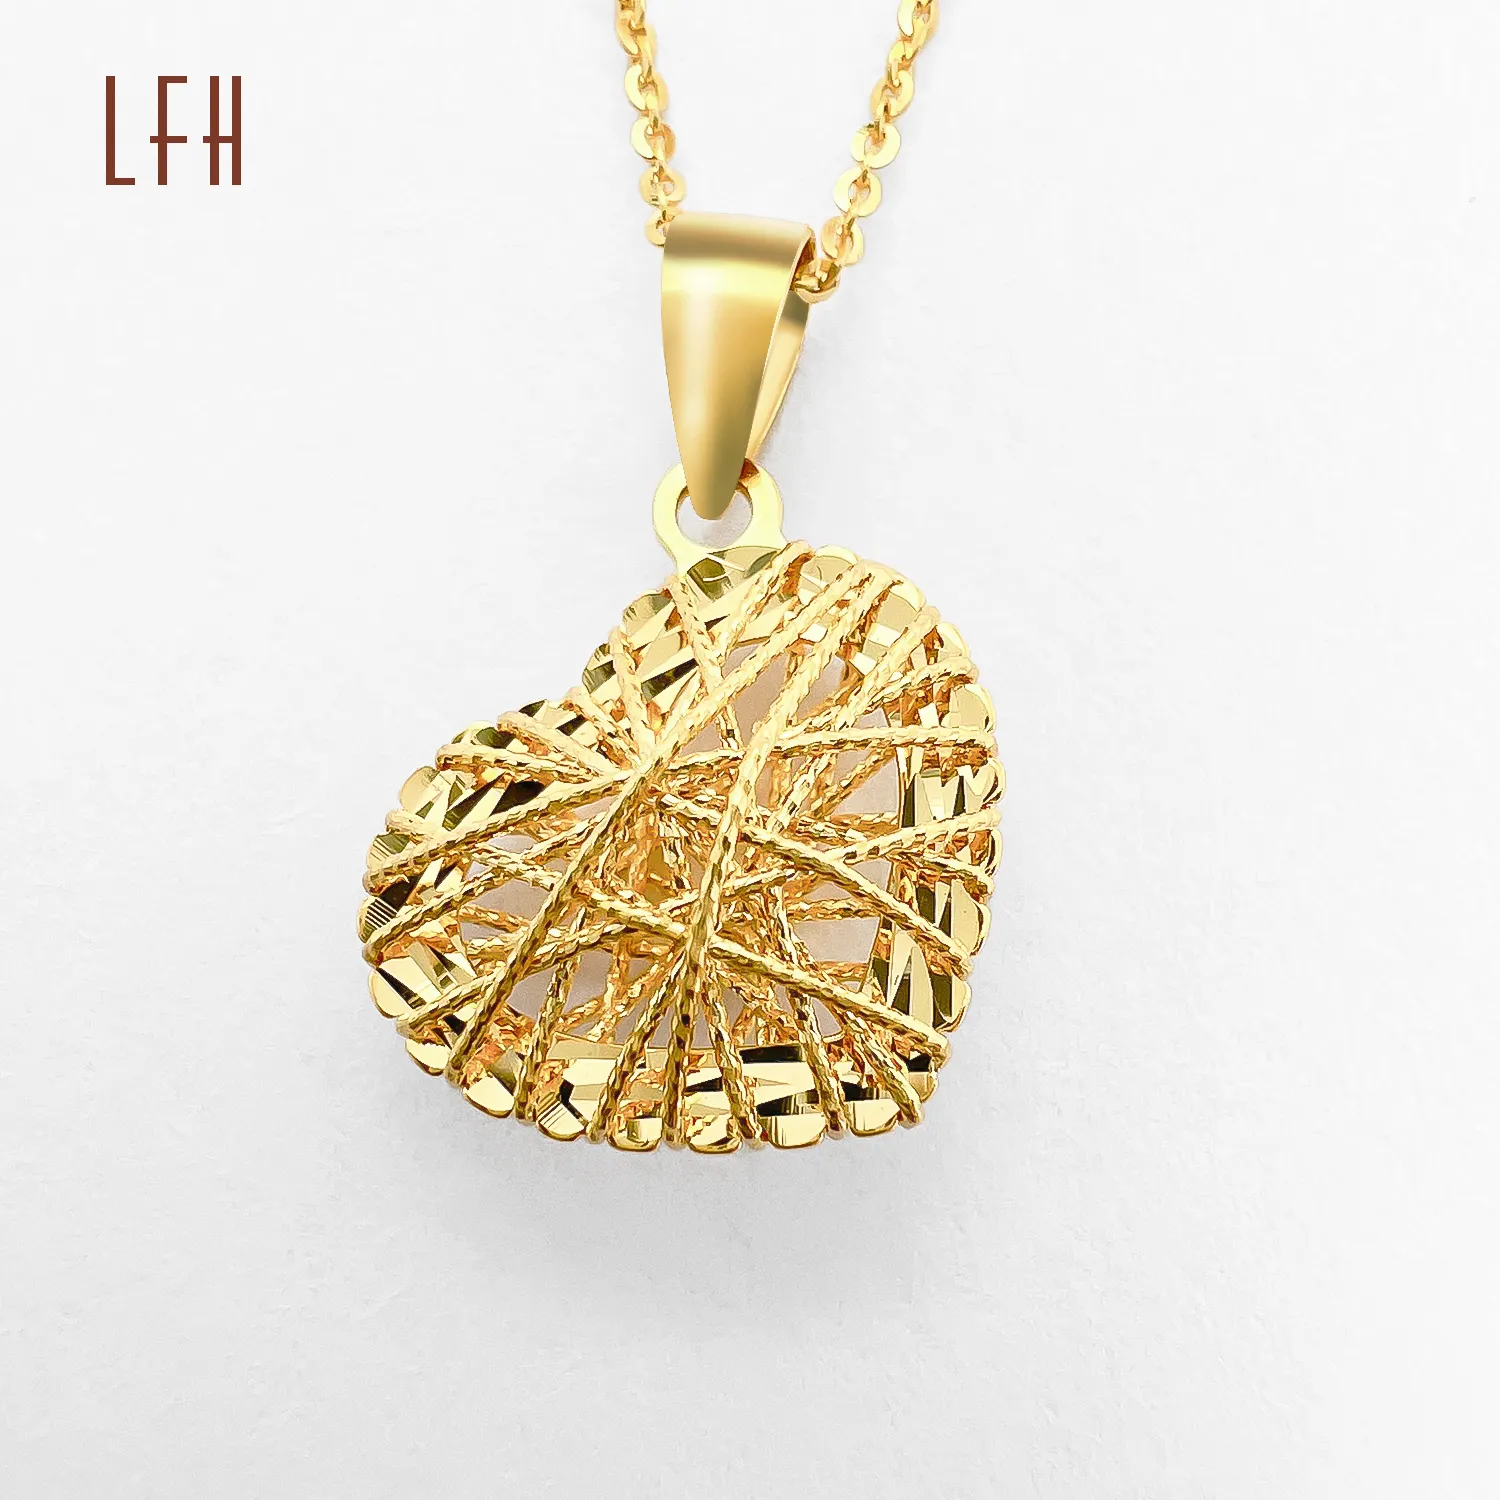 LFH Collier en or jaune véritable 18 carats Collier en forme de cœur véritable 1 Collier en or véritable de la clavicule 8 carats Bijoux pendentifs en or massif